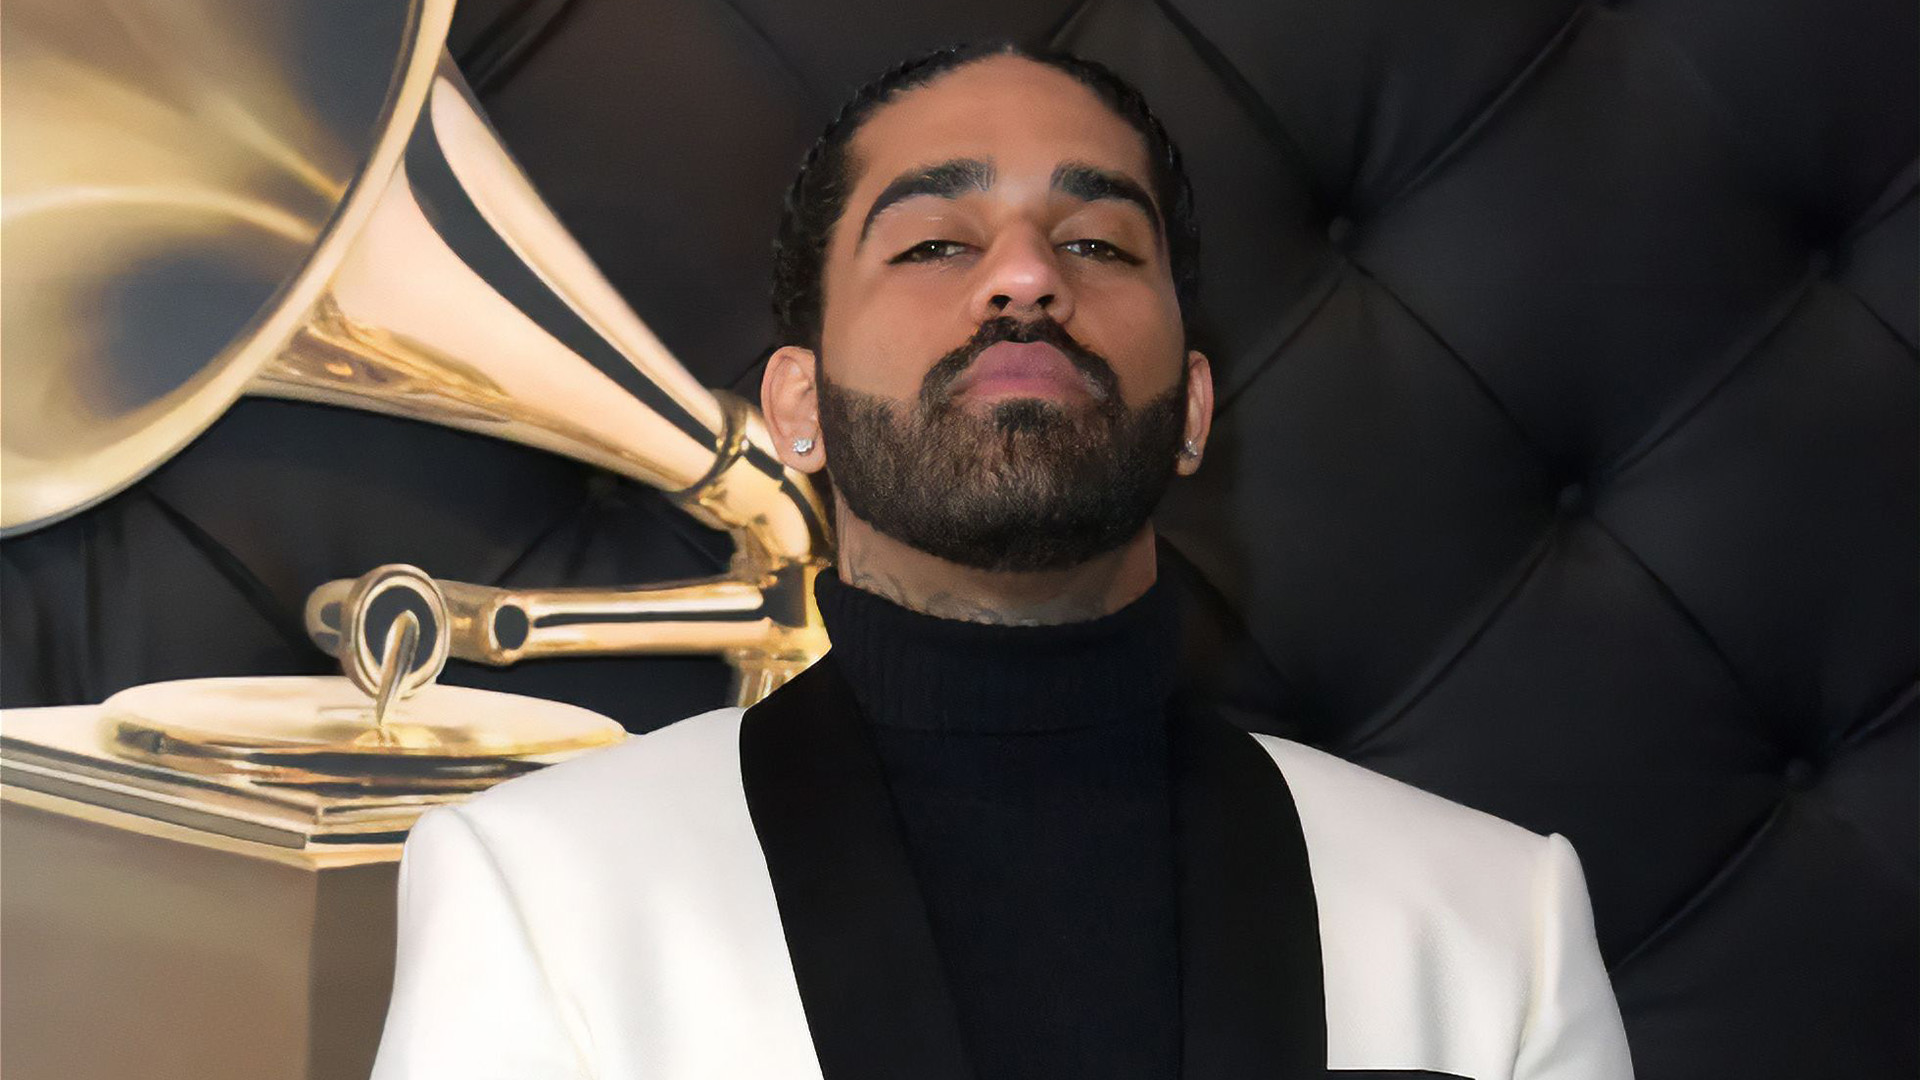 Grammy Award-Winning Audio Engineer Derek 'MixedByAli' Ali Raises $7.5M For His Music Tech Startup EngineEars